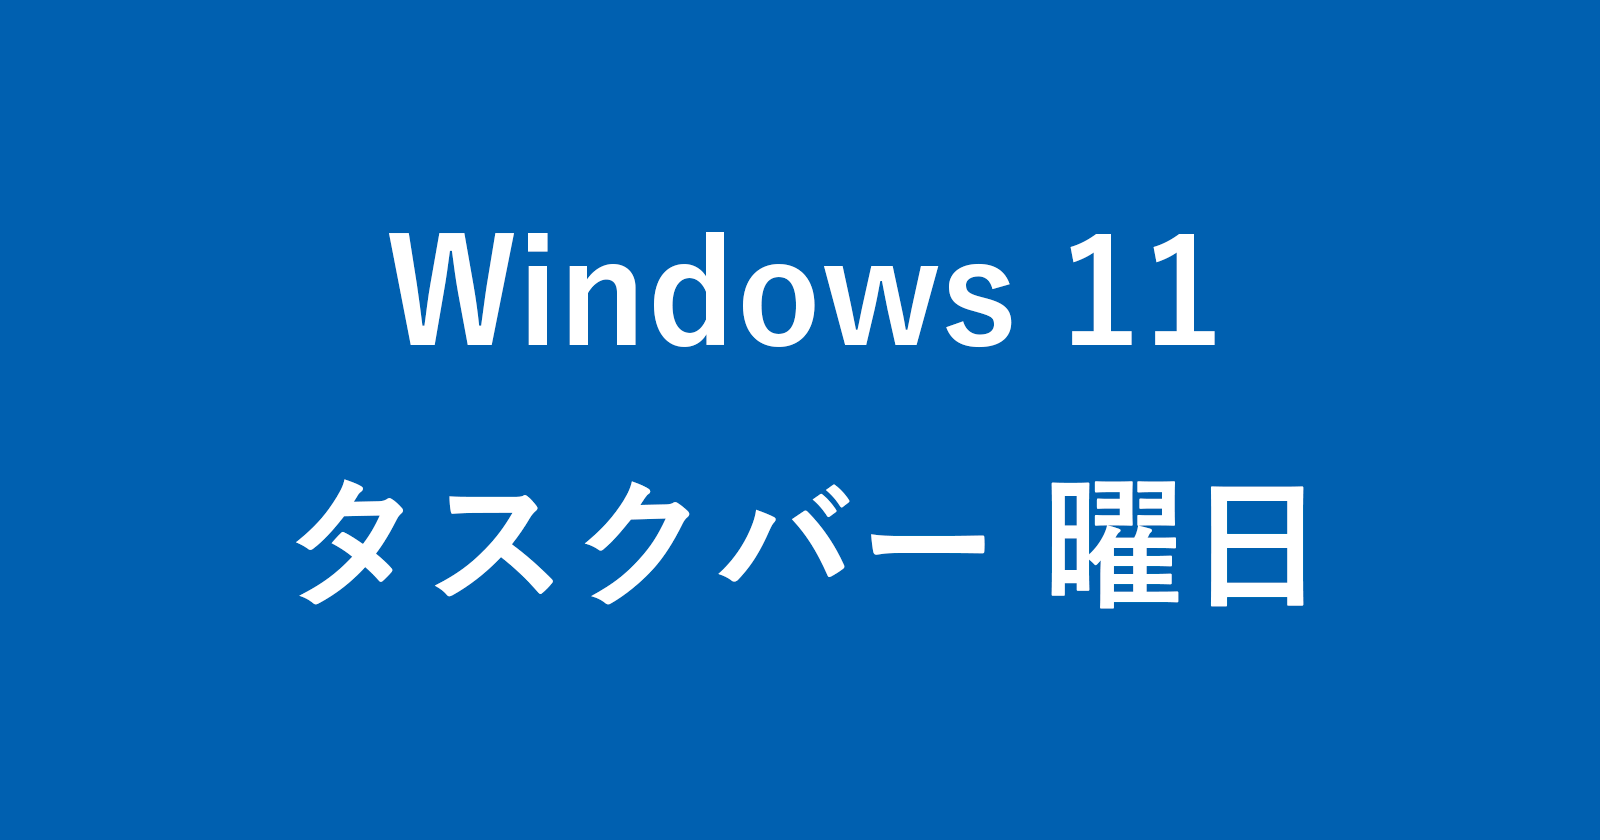 windows 11 taskbar week